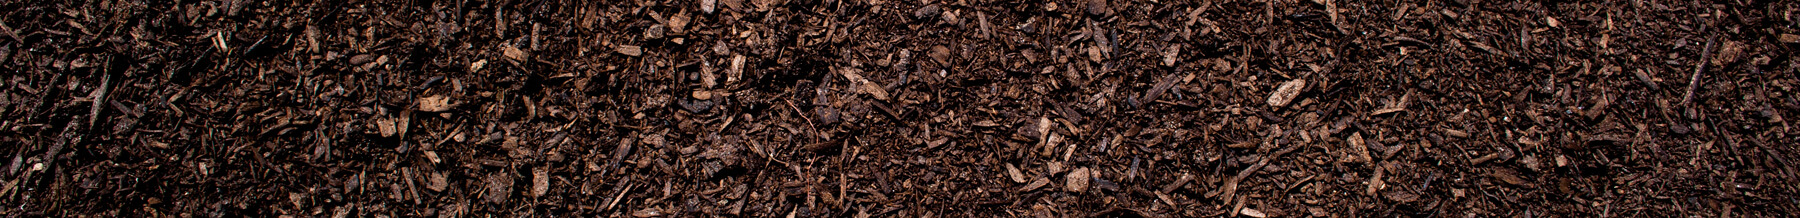 close up wide shot of manure compost